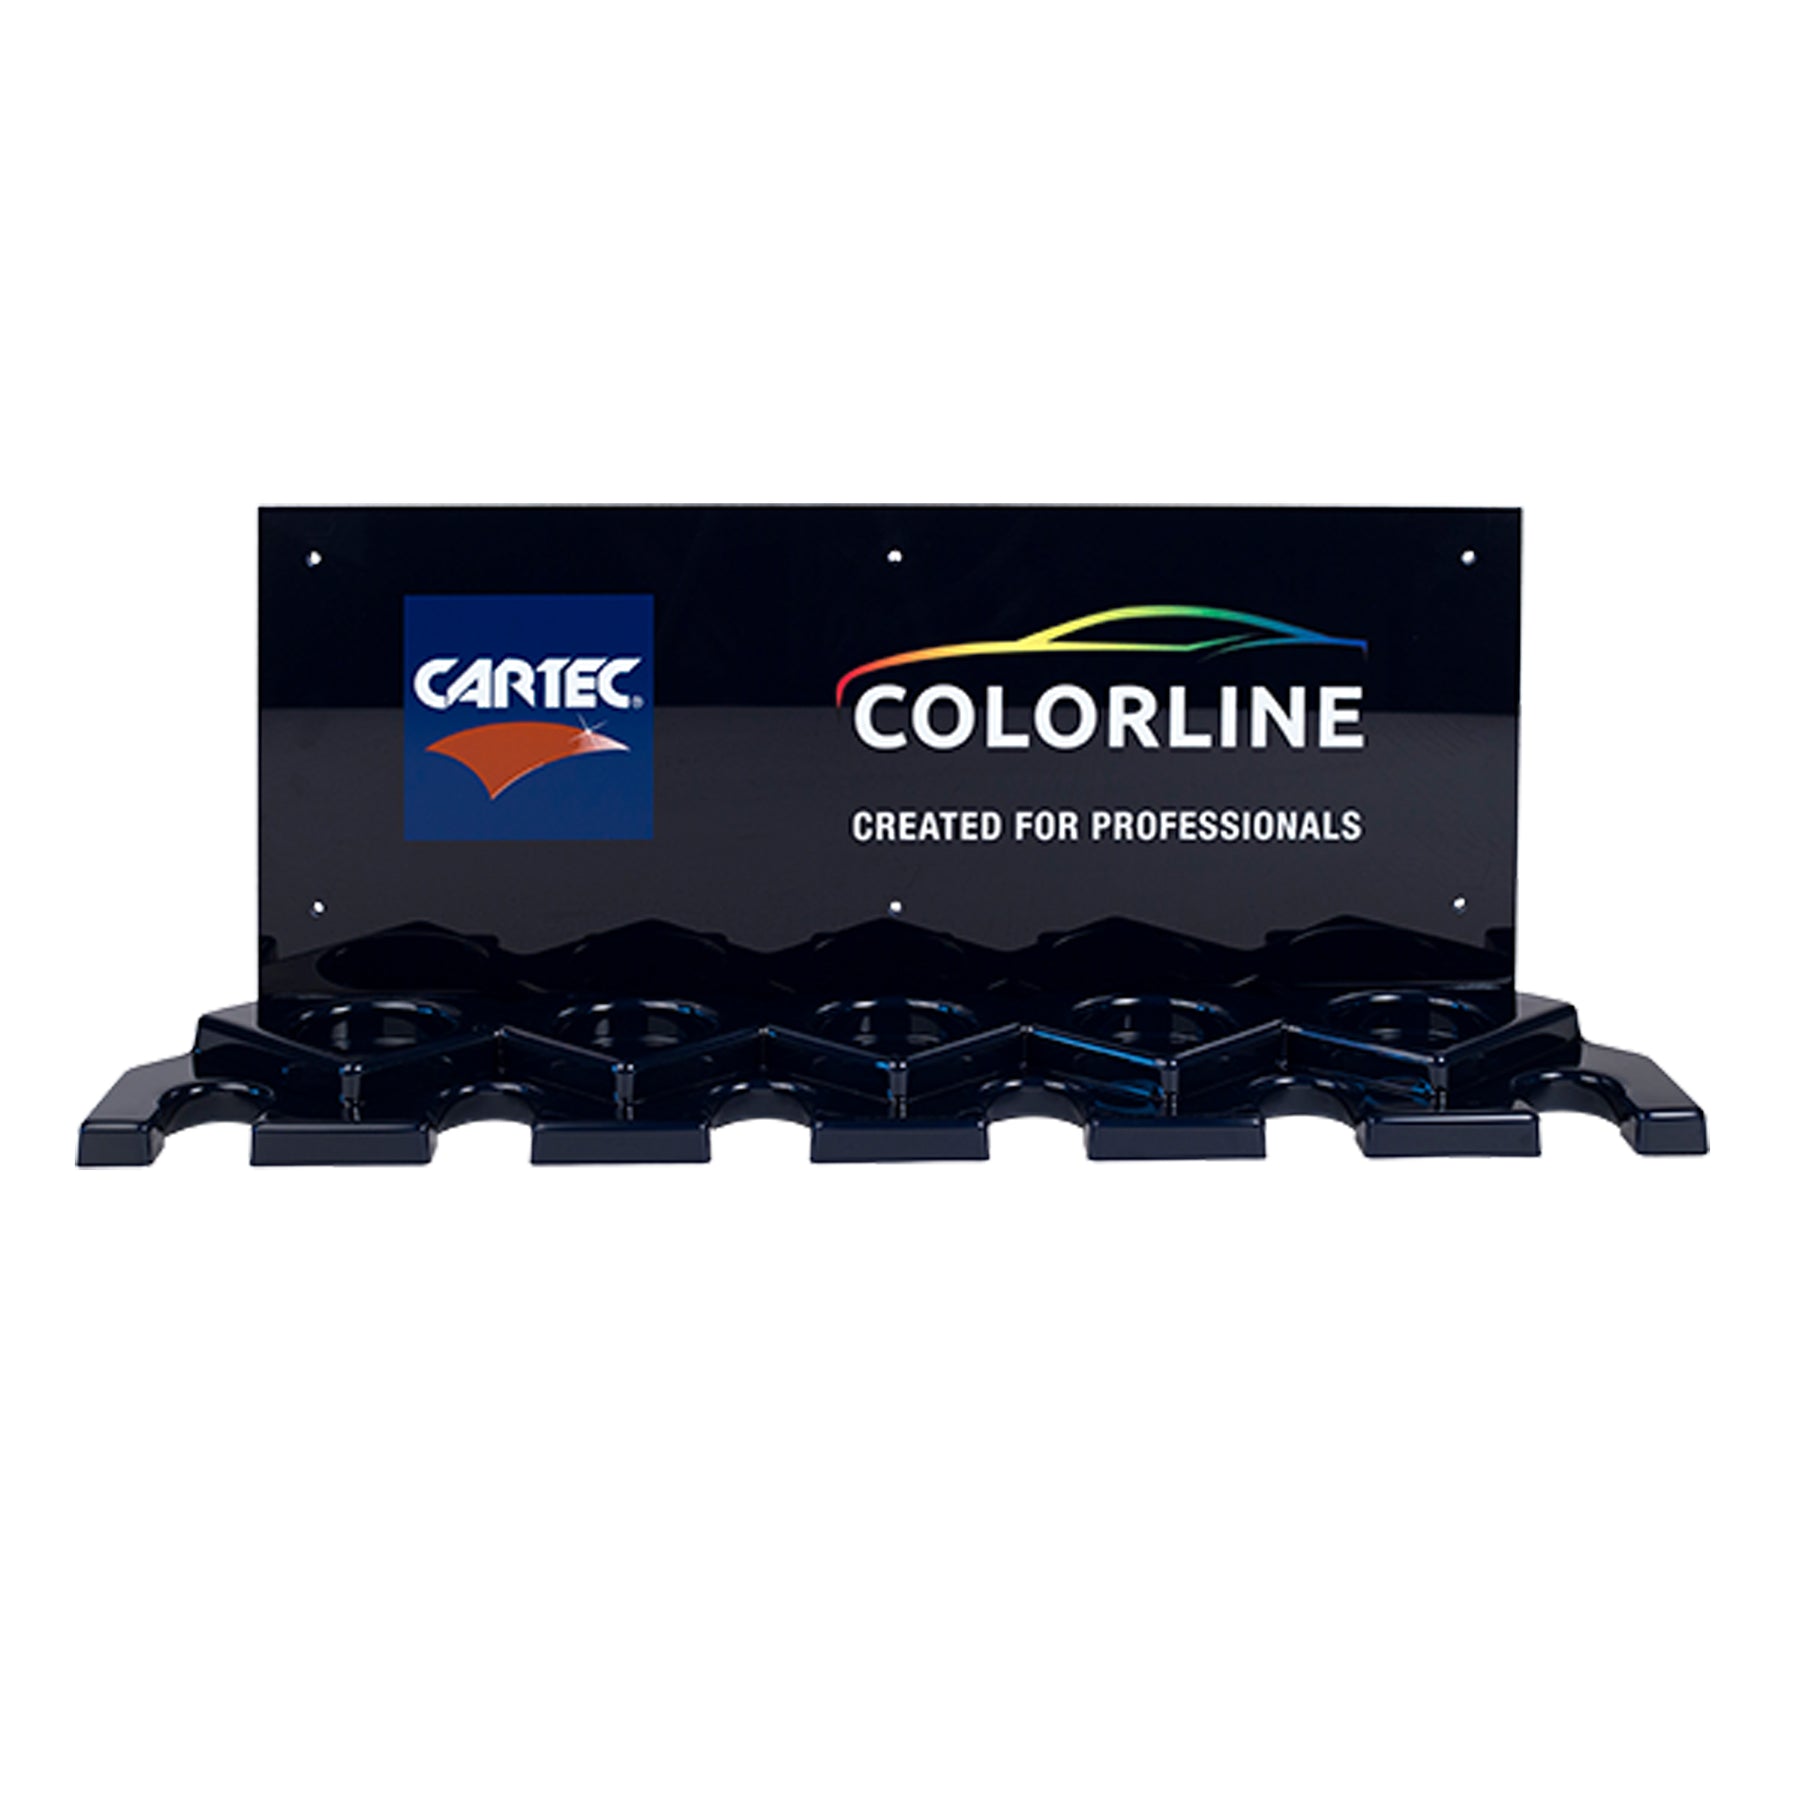 CARTEC Colorline Starterpack